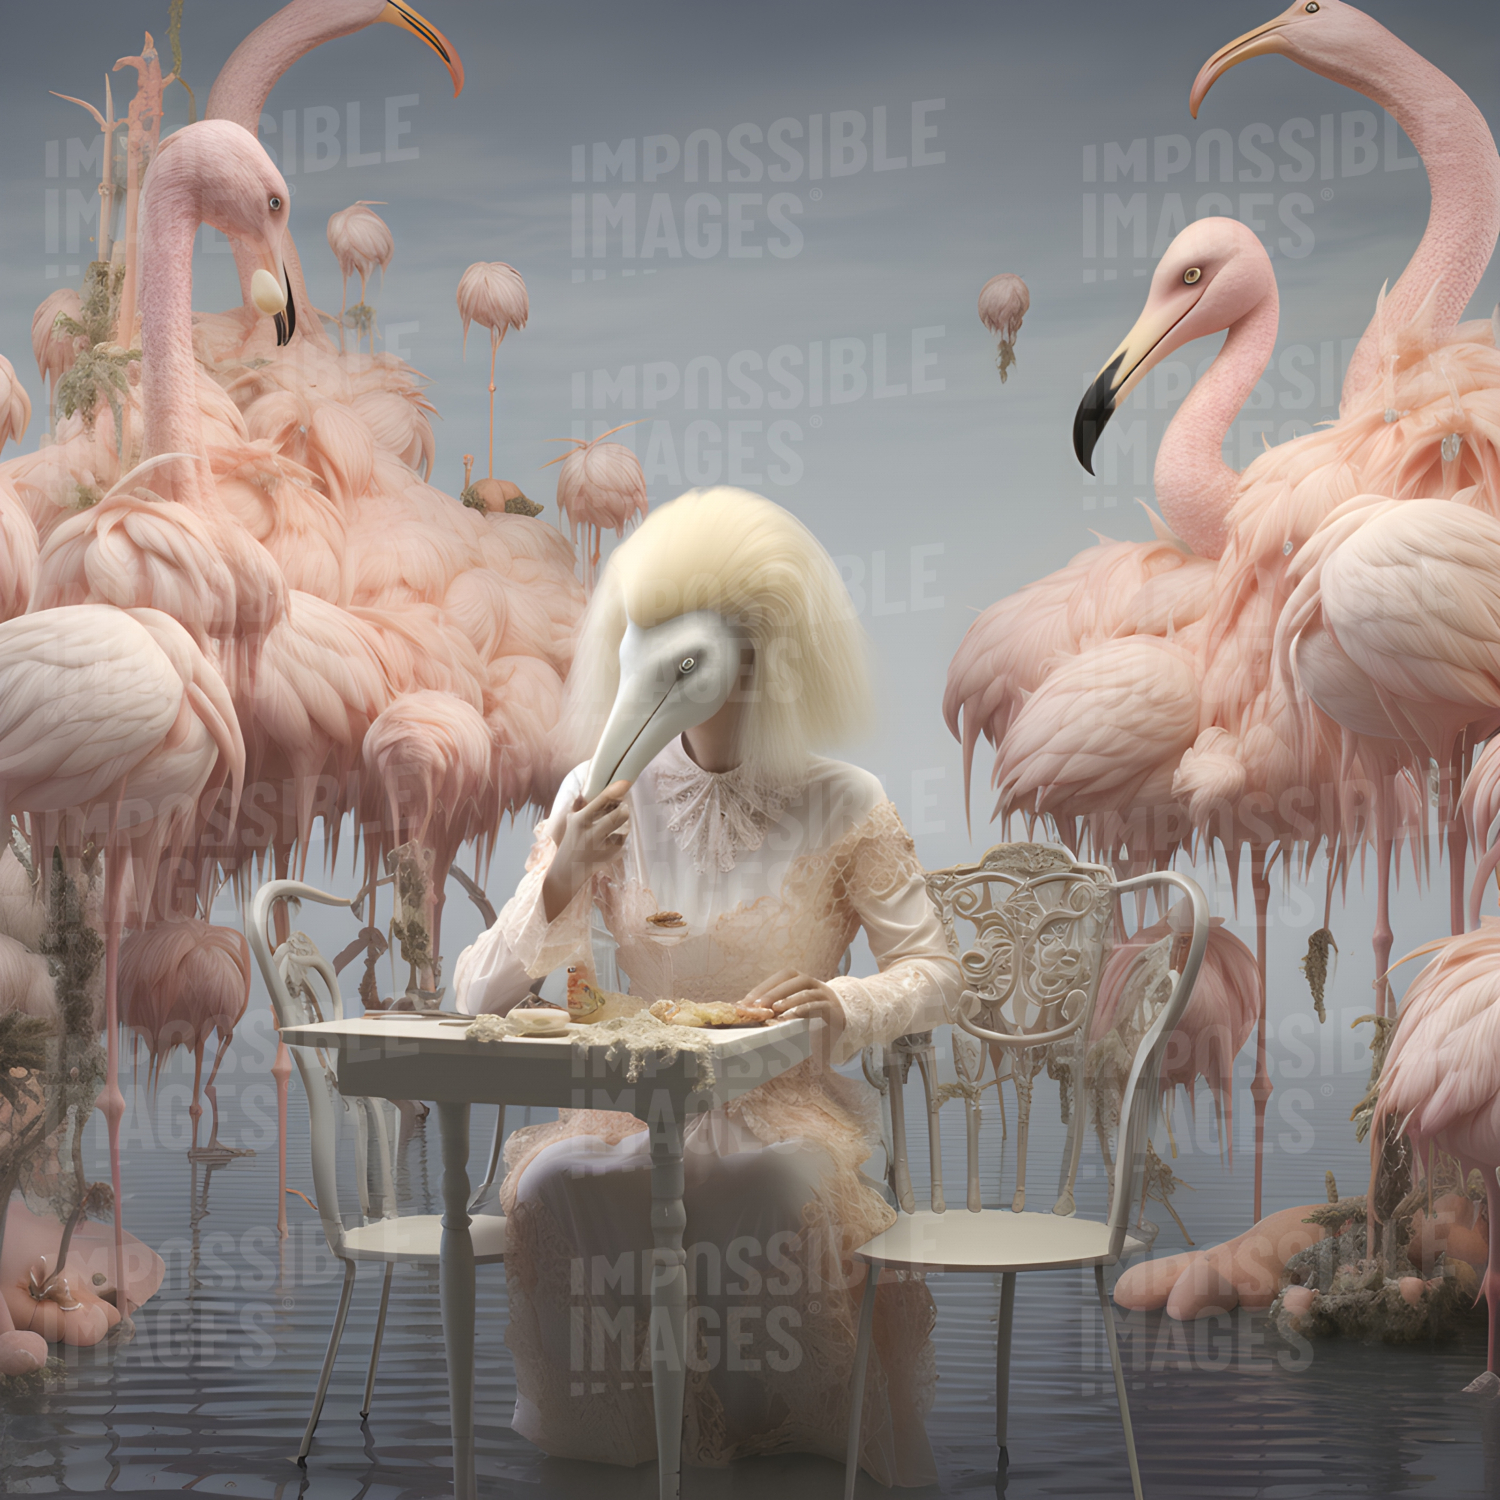 Haunting flamingo-woman hybrid